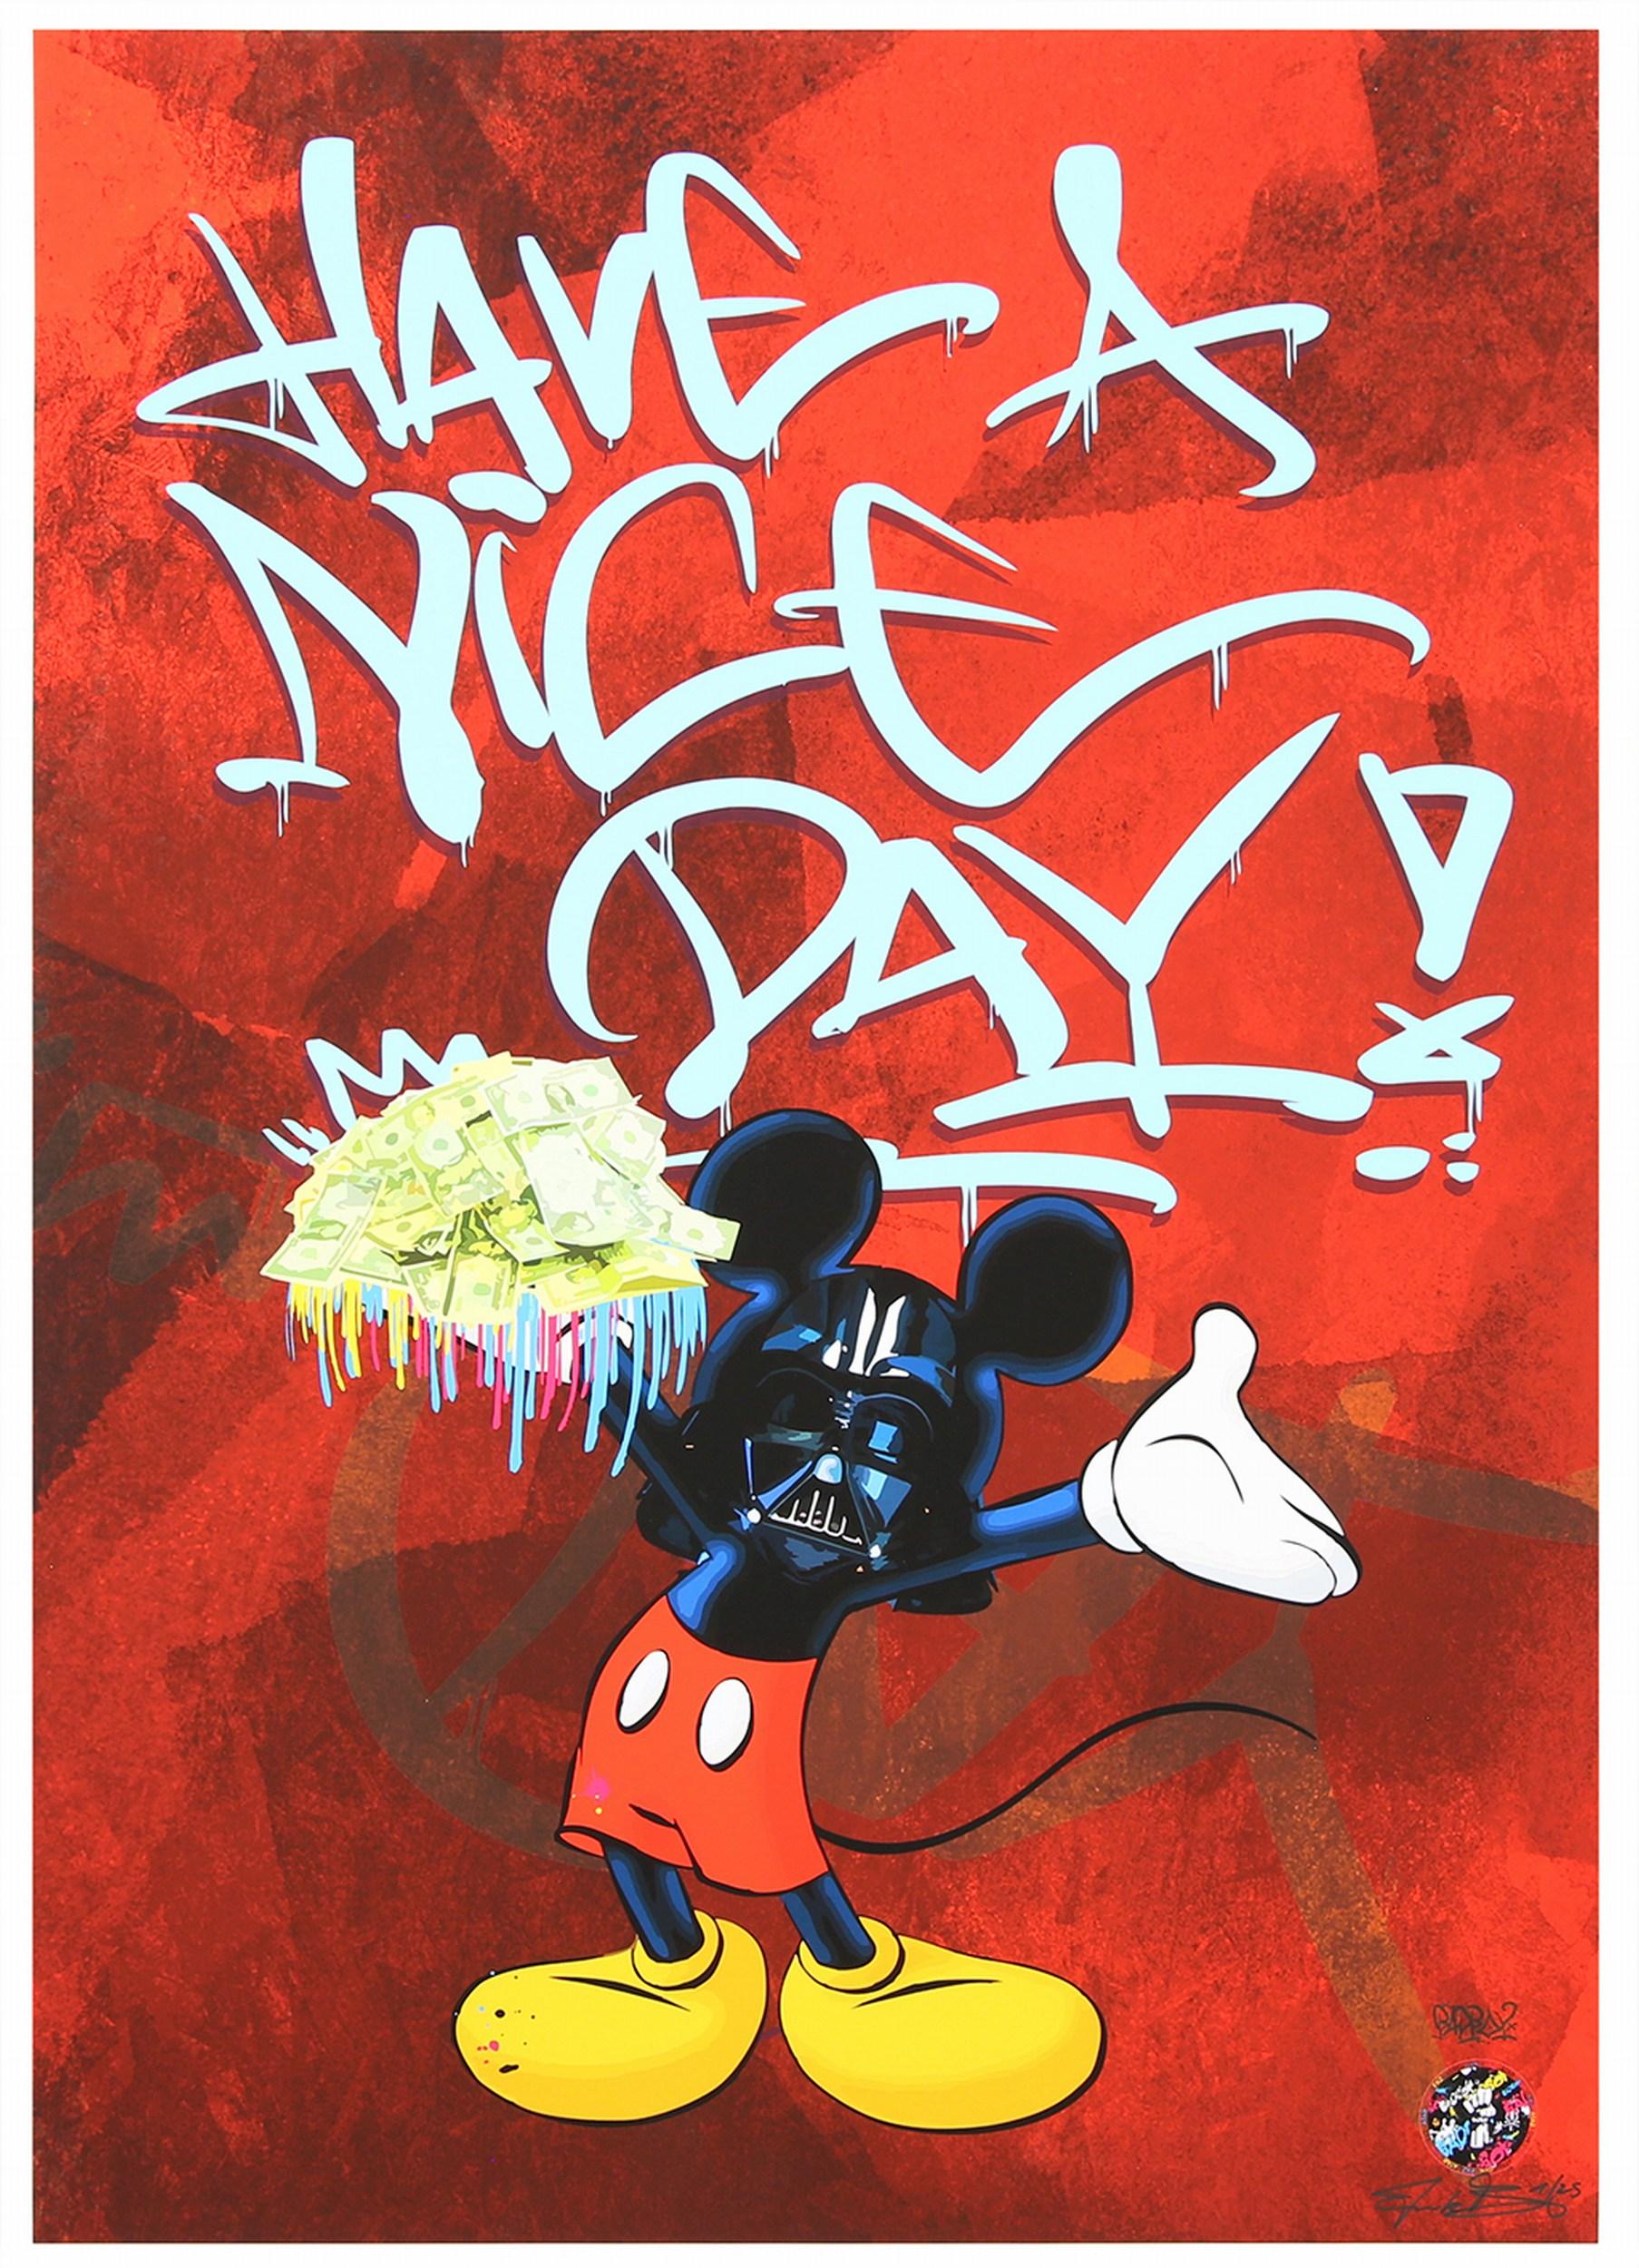  Have A Nice Day (Graffiti, Urban Art, Street Art, Mickey Mouse, Darth Vader)